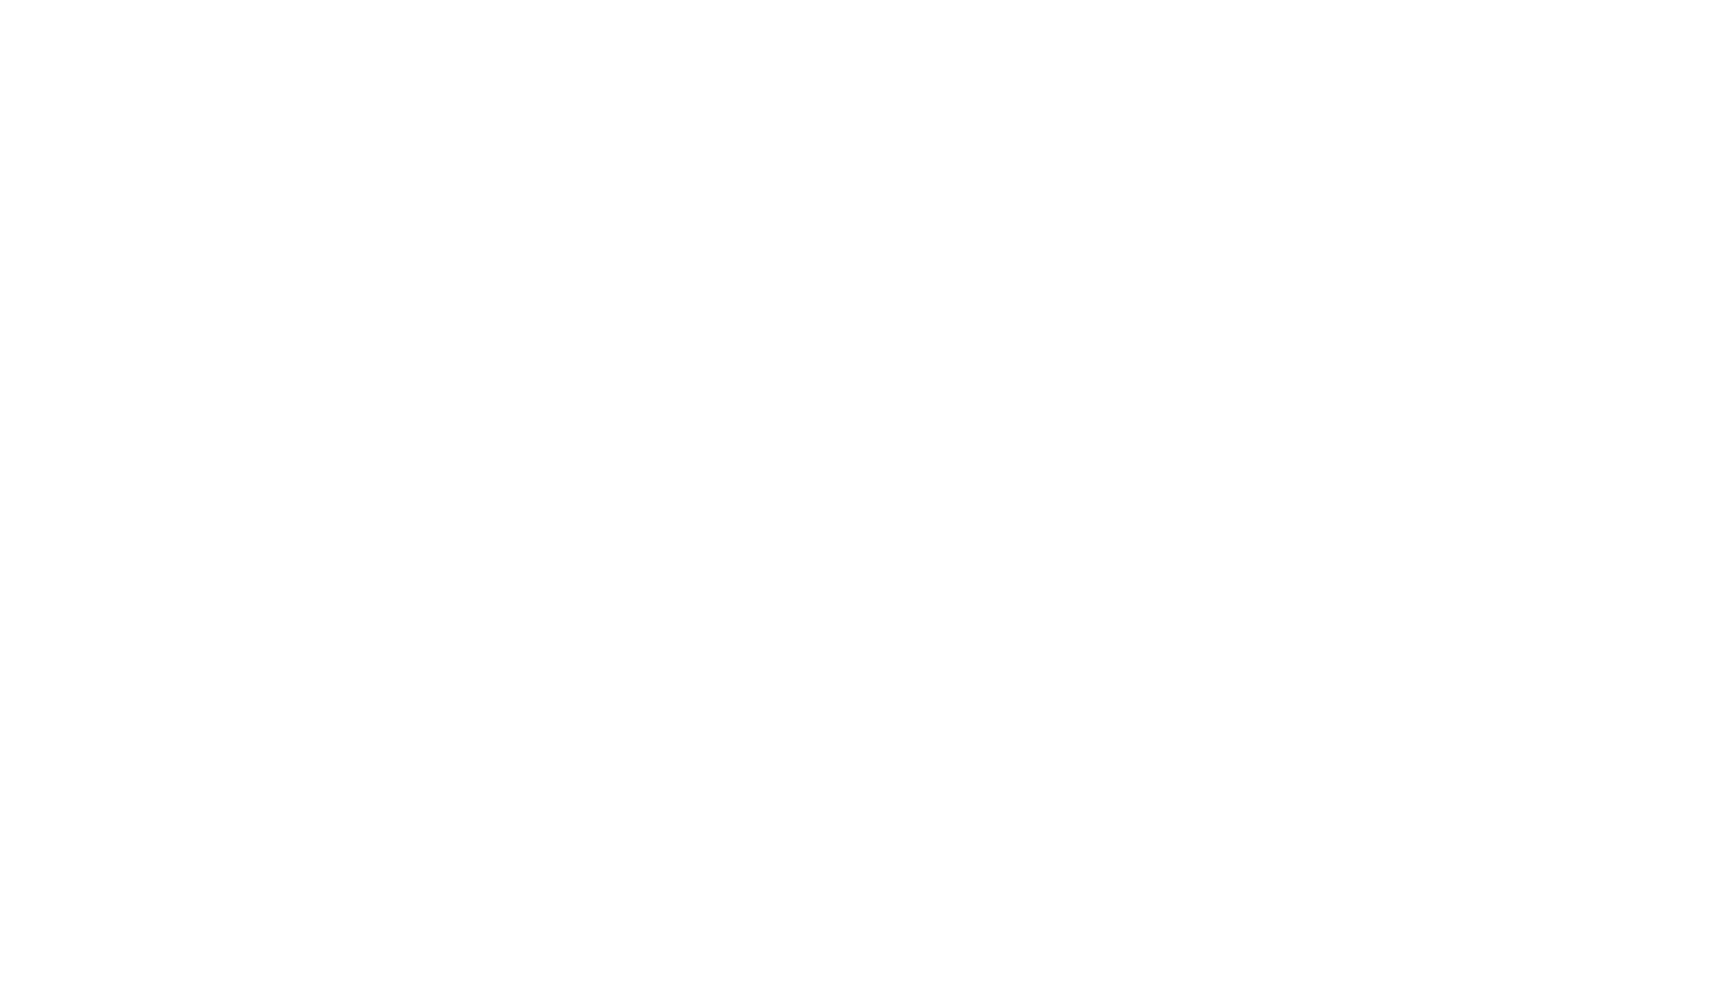 The brick